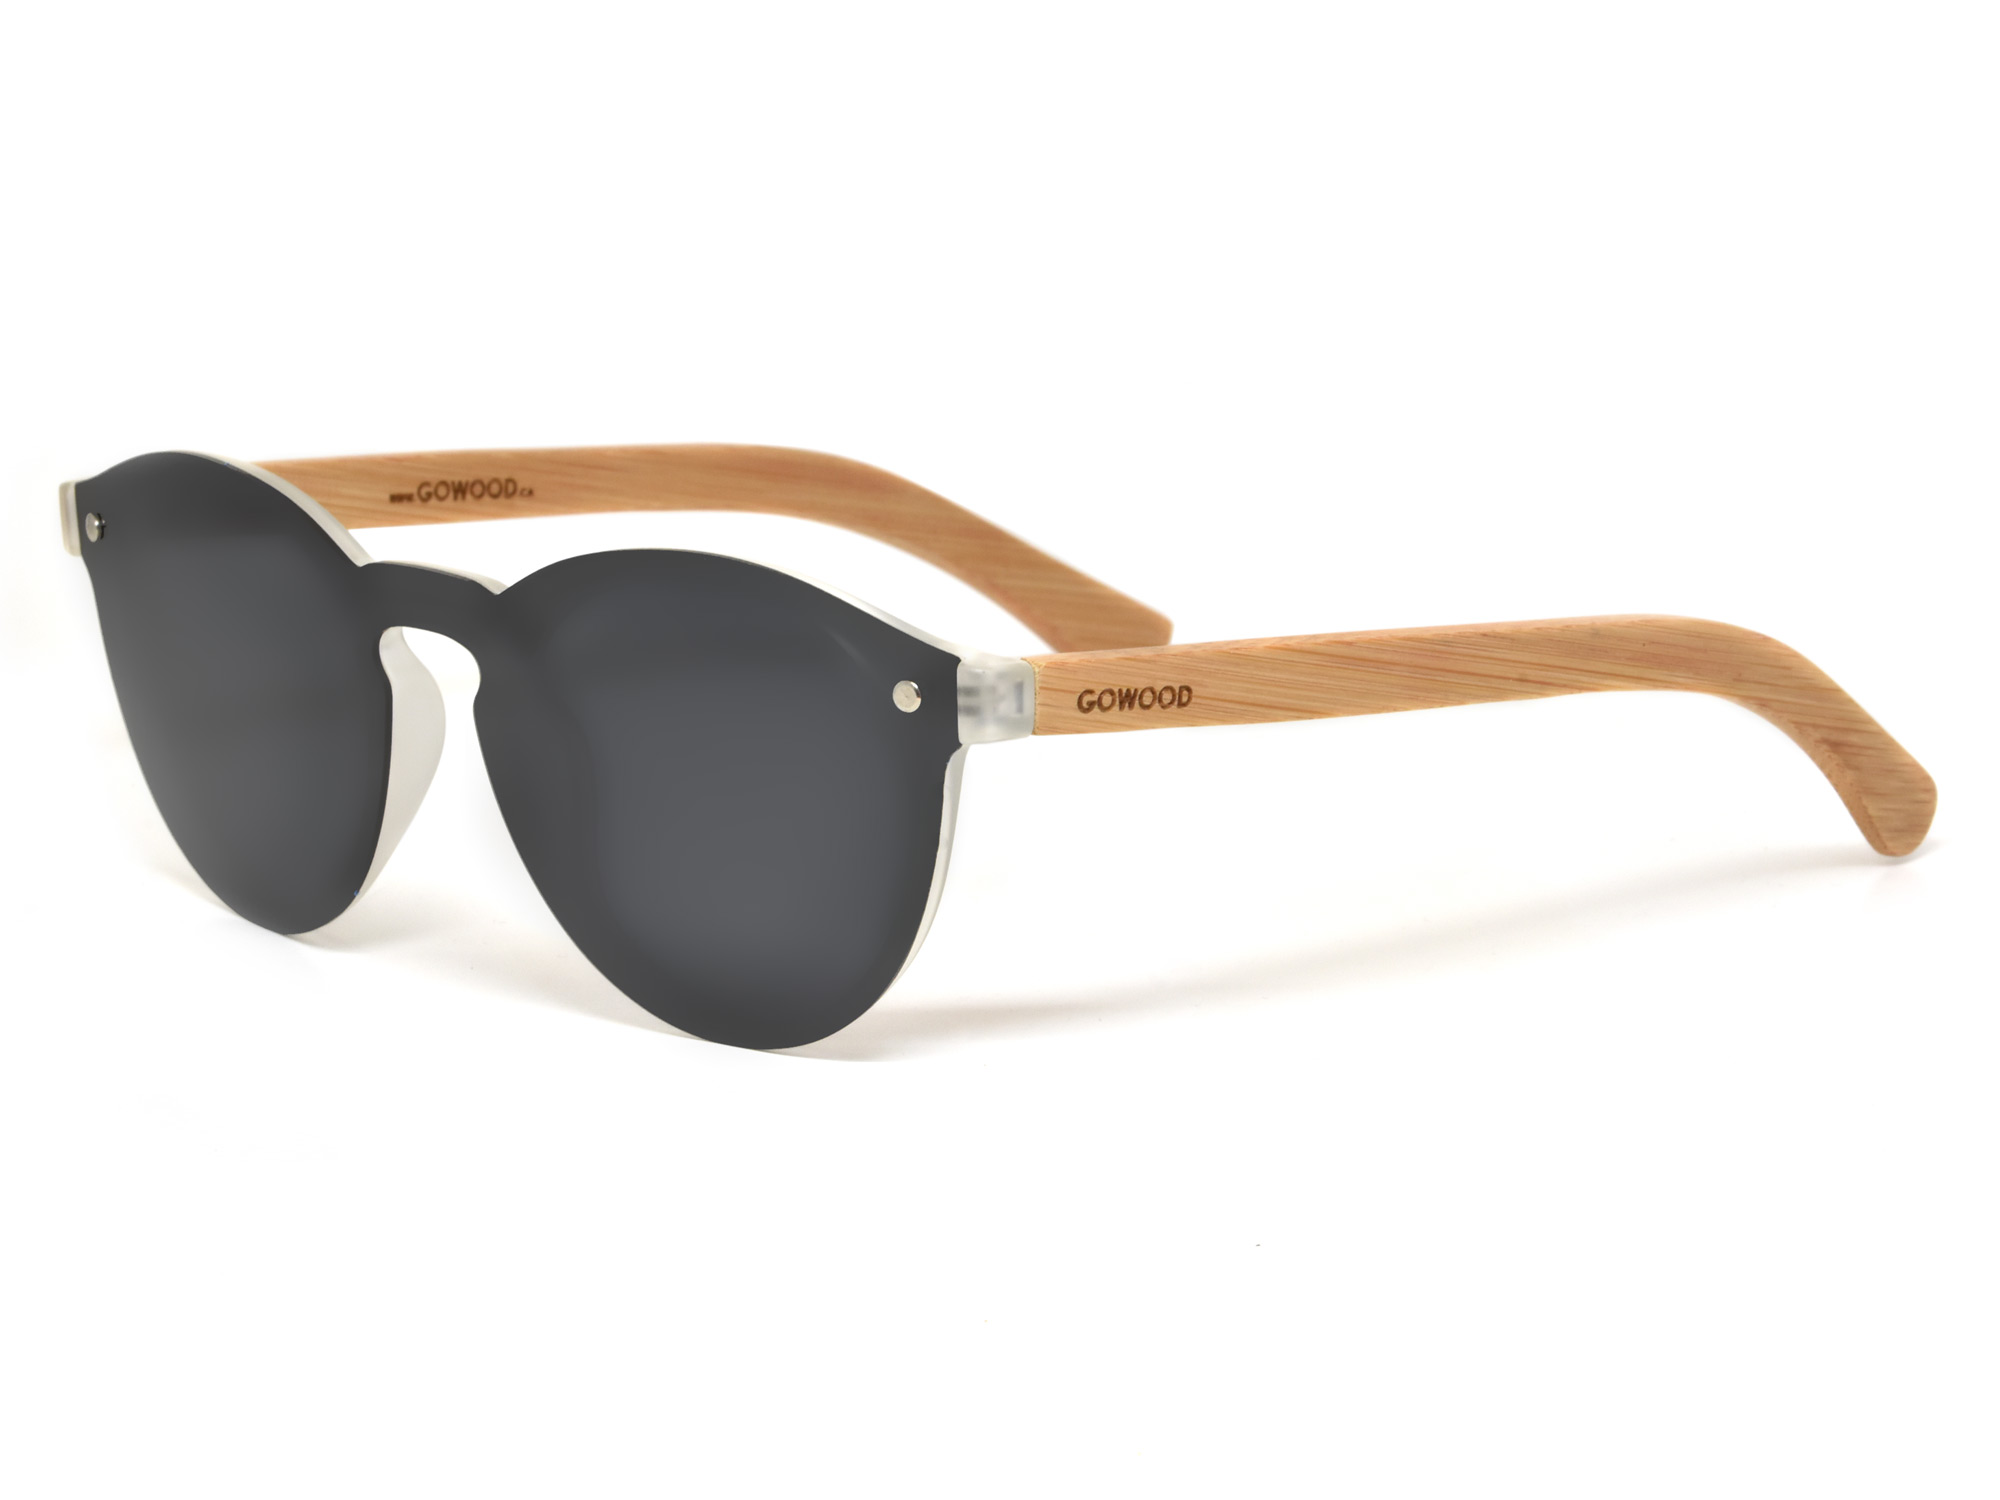 Round bamboo wood sunglasses with dark grey polarized lens